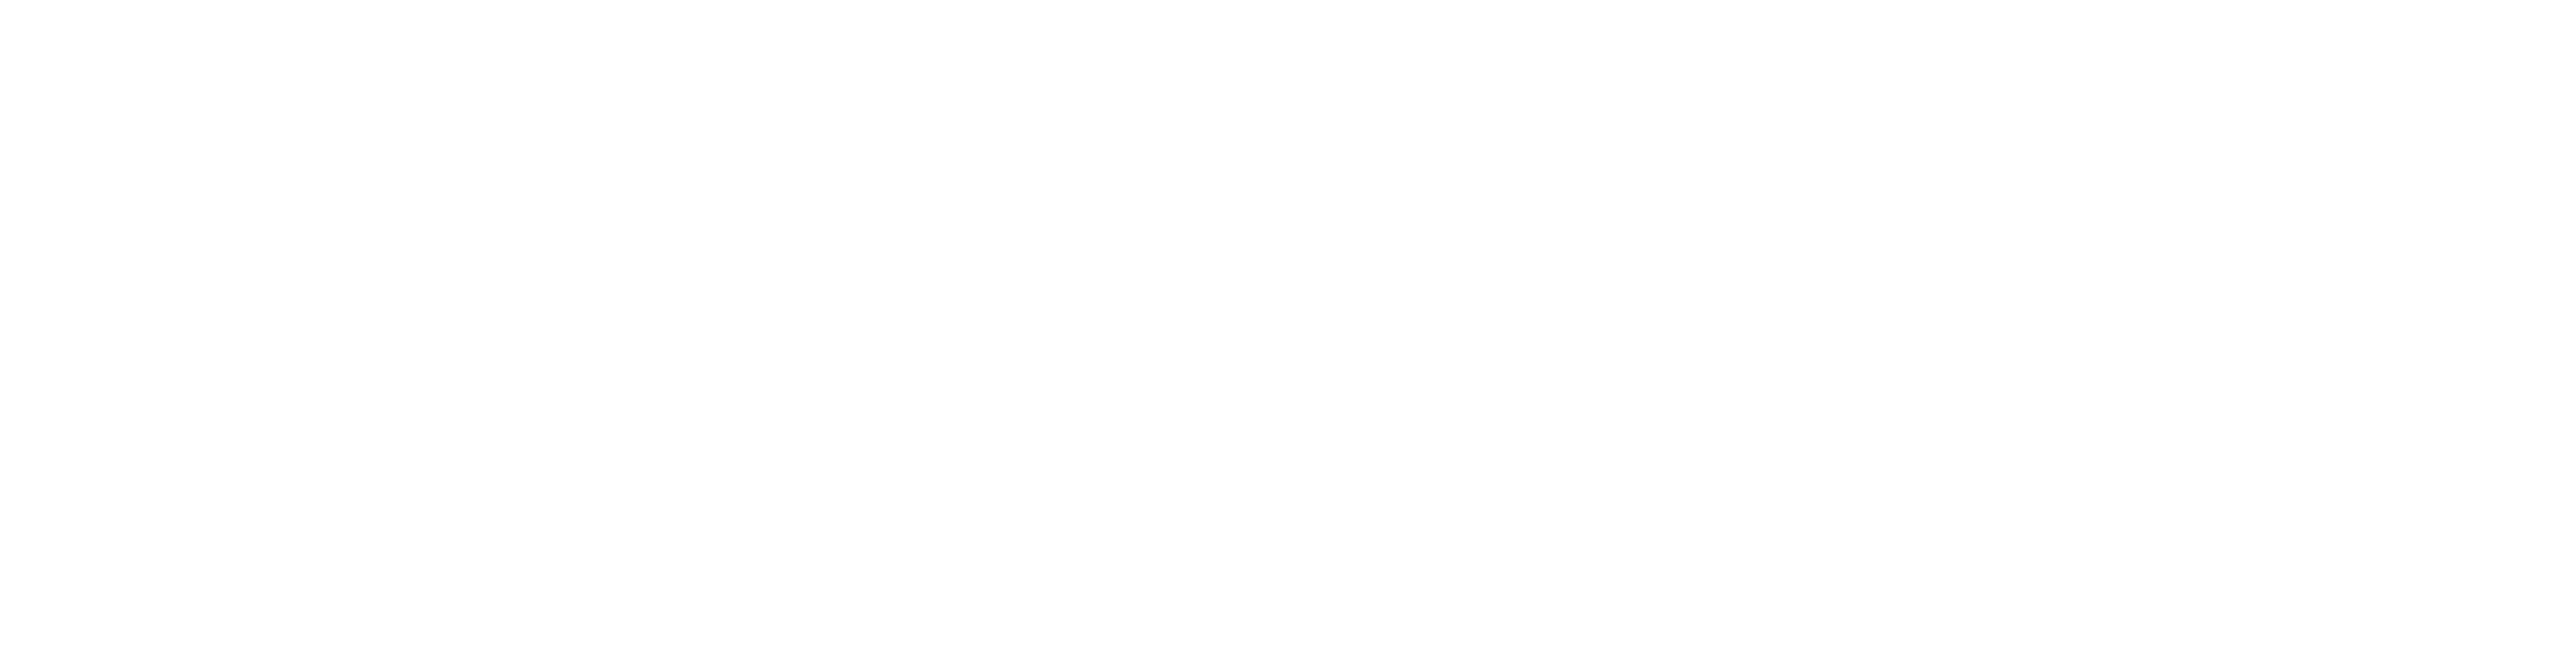 Logo Bauer Group